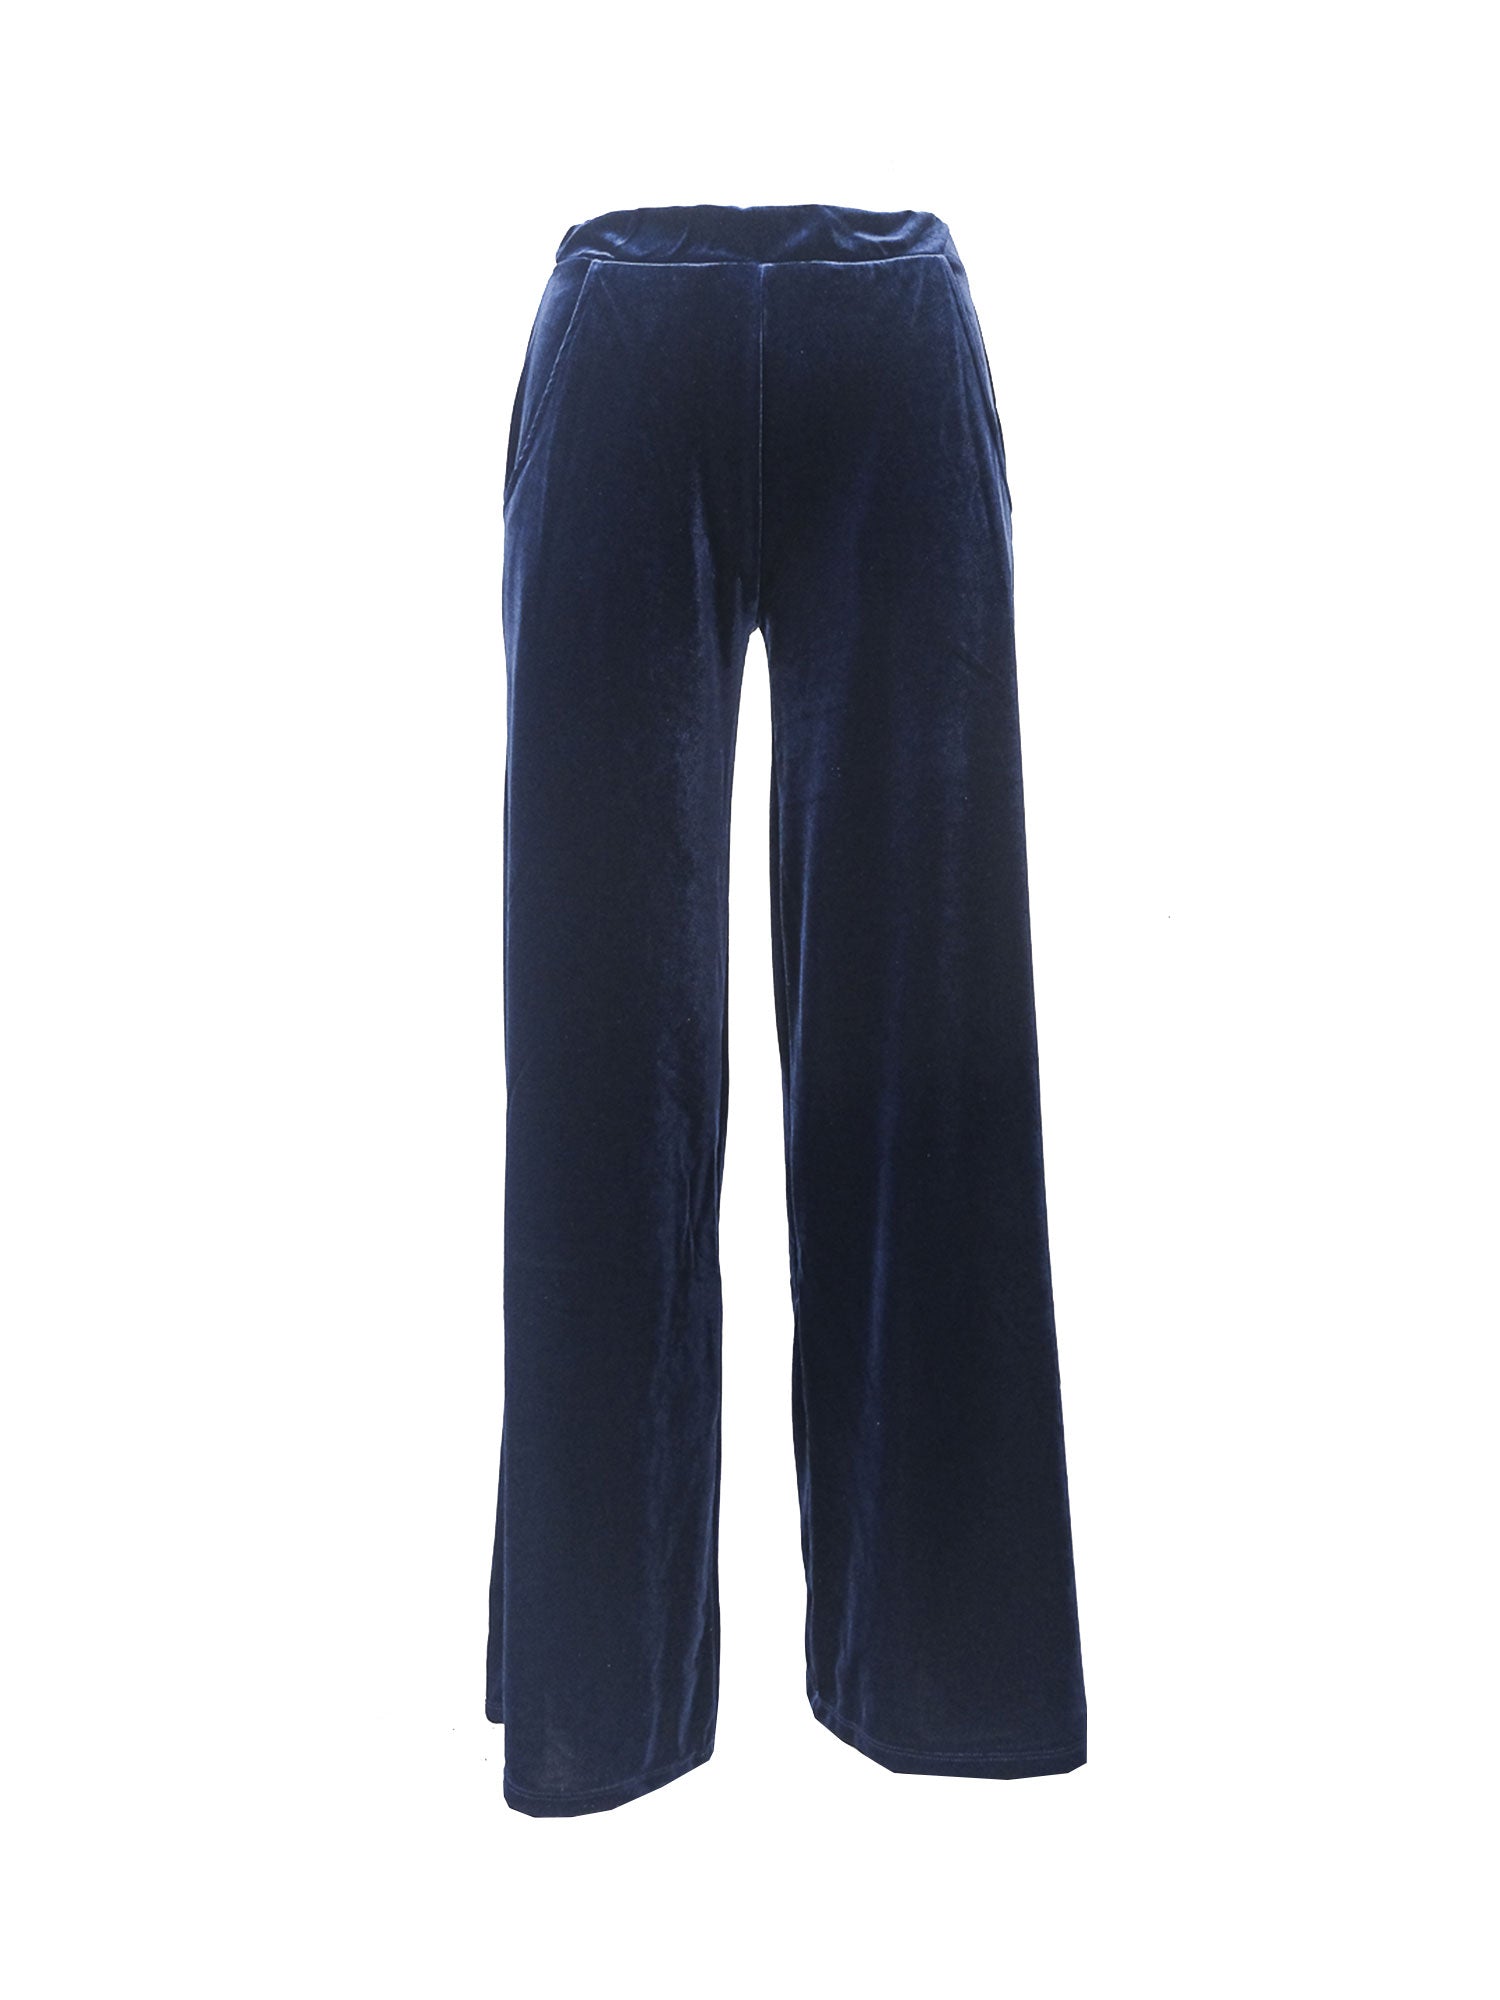 MAXIE - wide-leg chenille trousers in blue